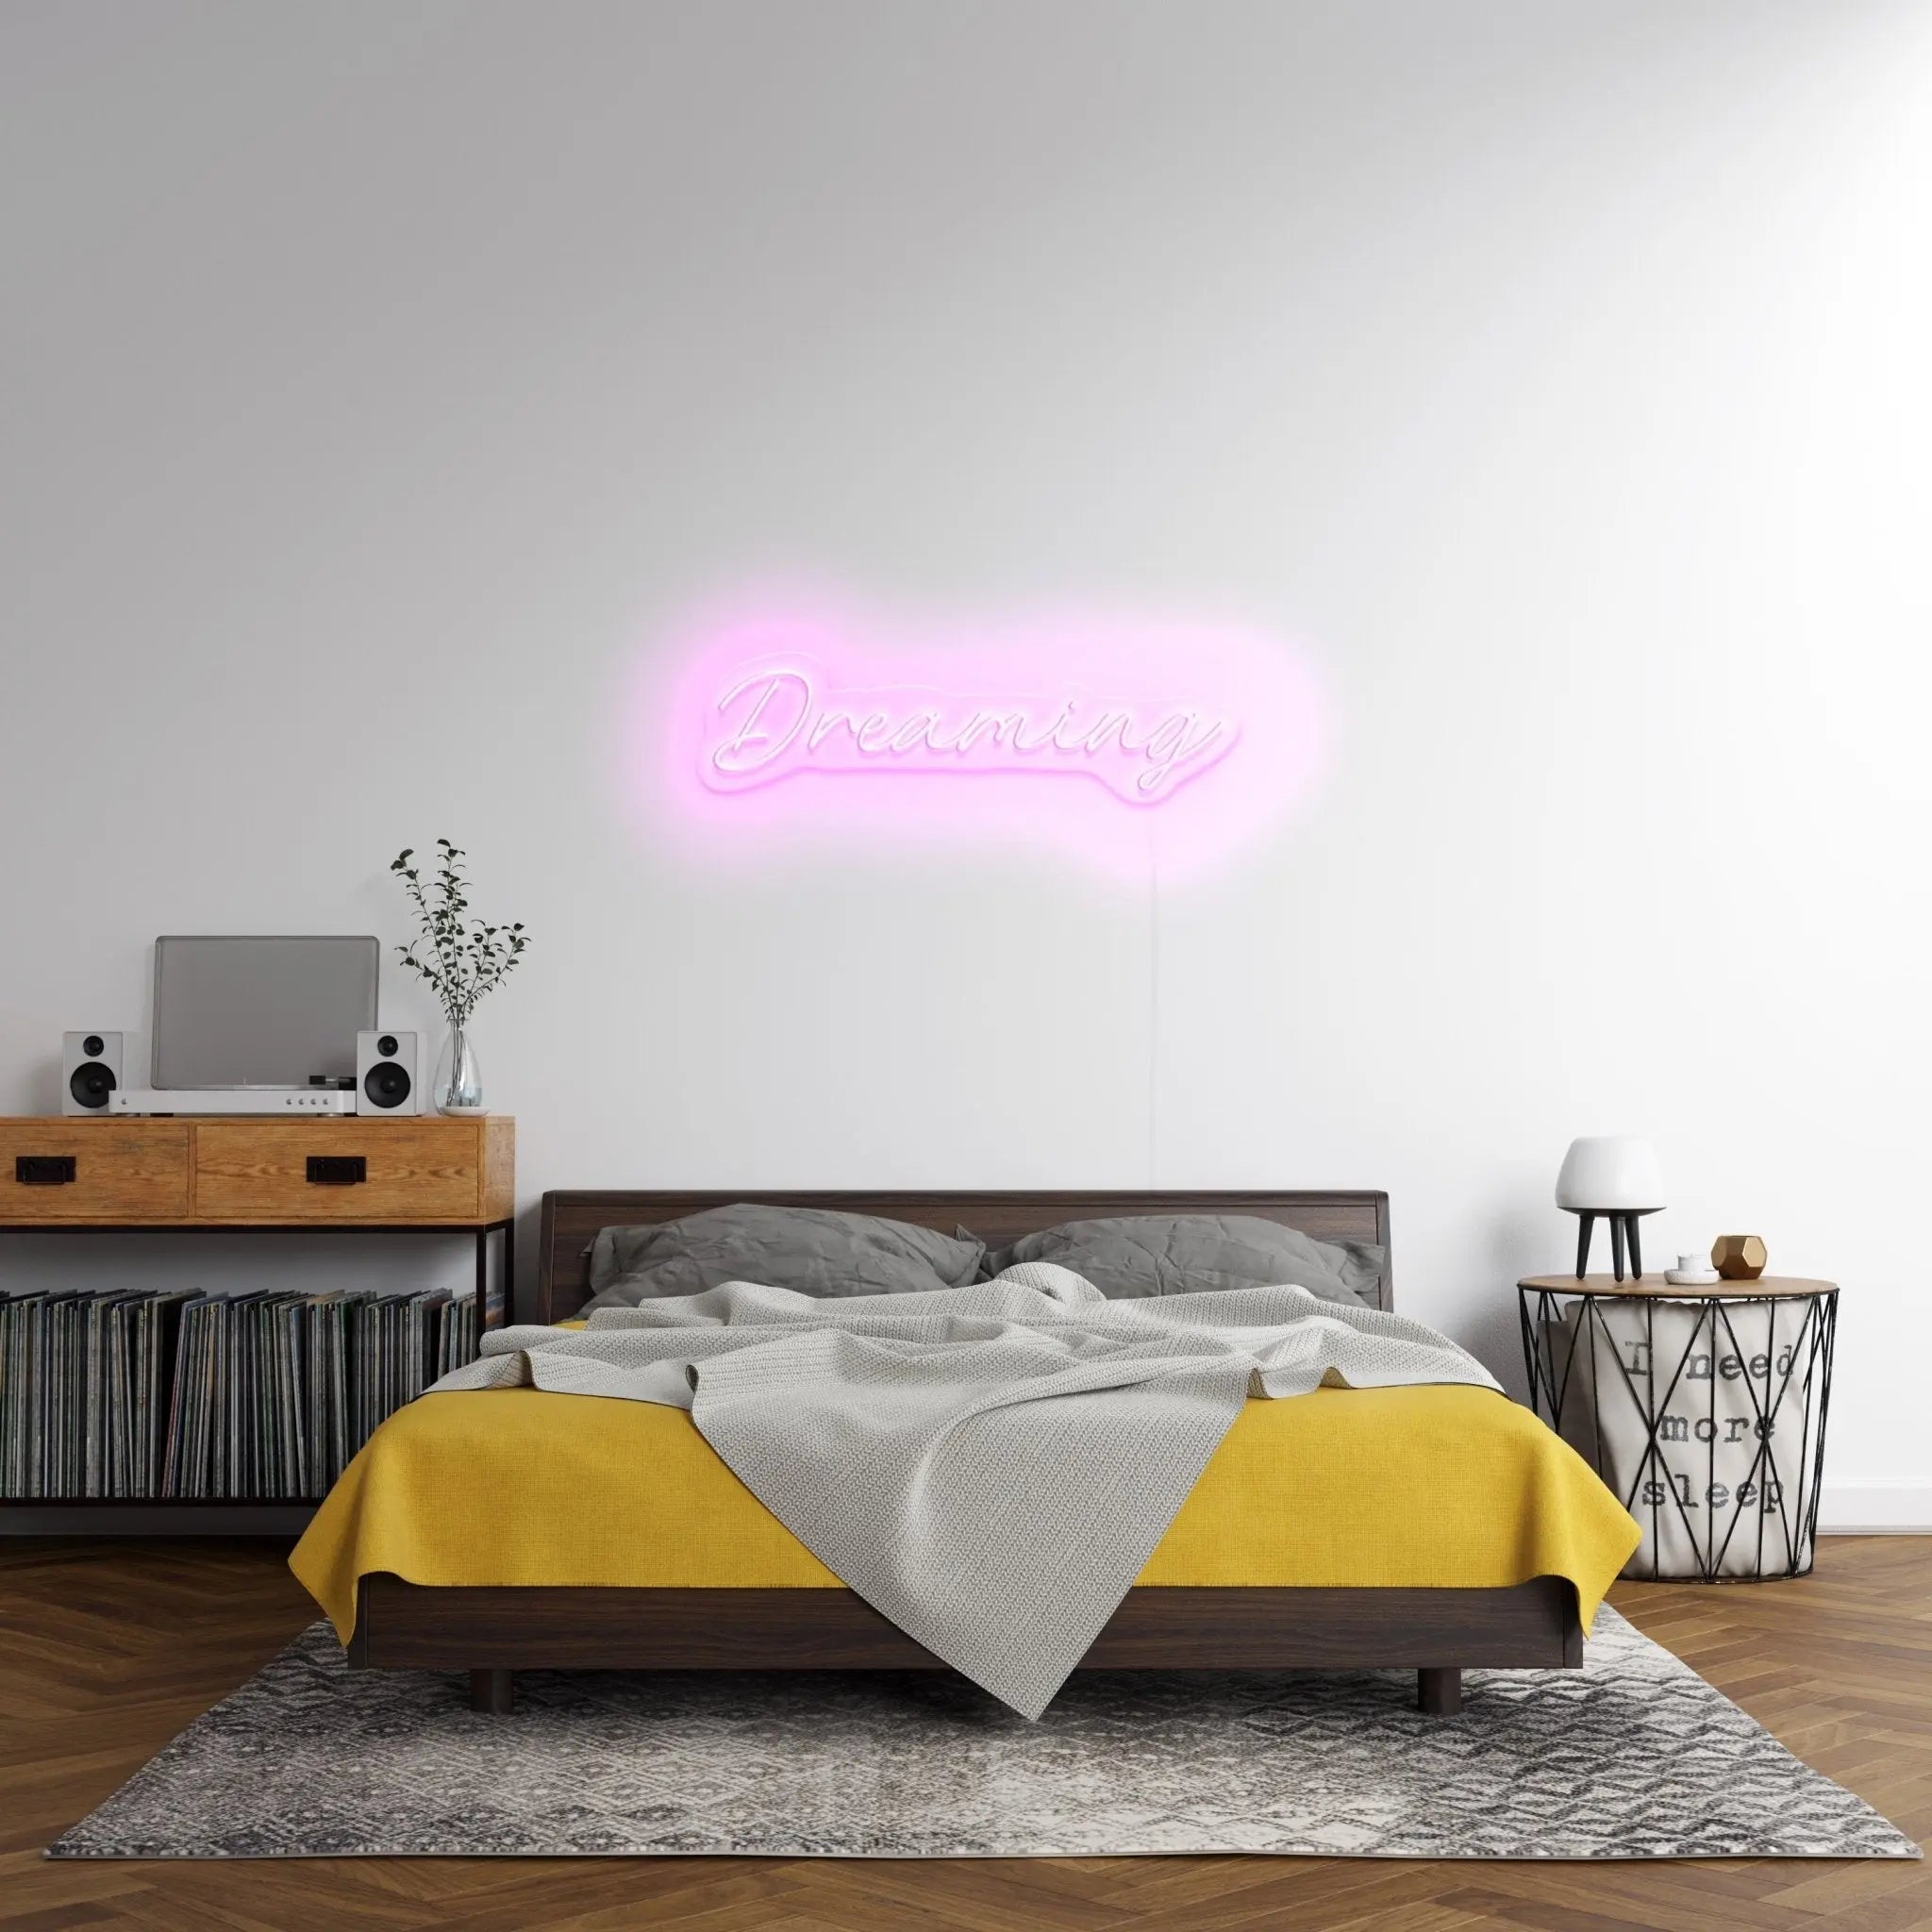 'Dreaming' LED Neon Sign - neonaffair